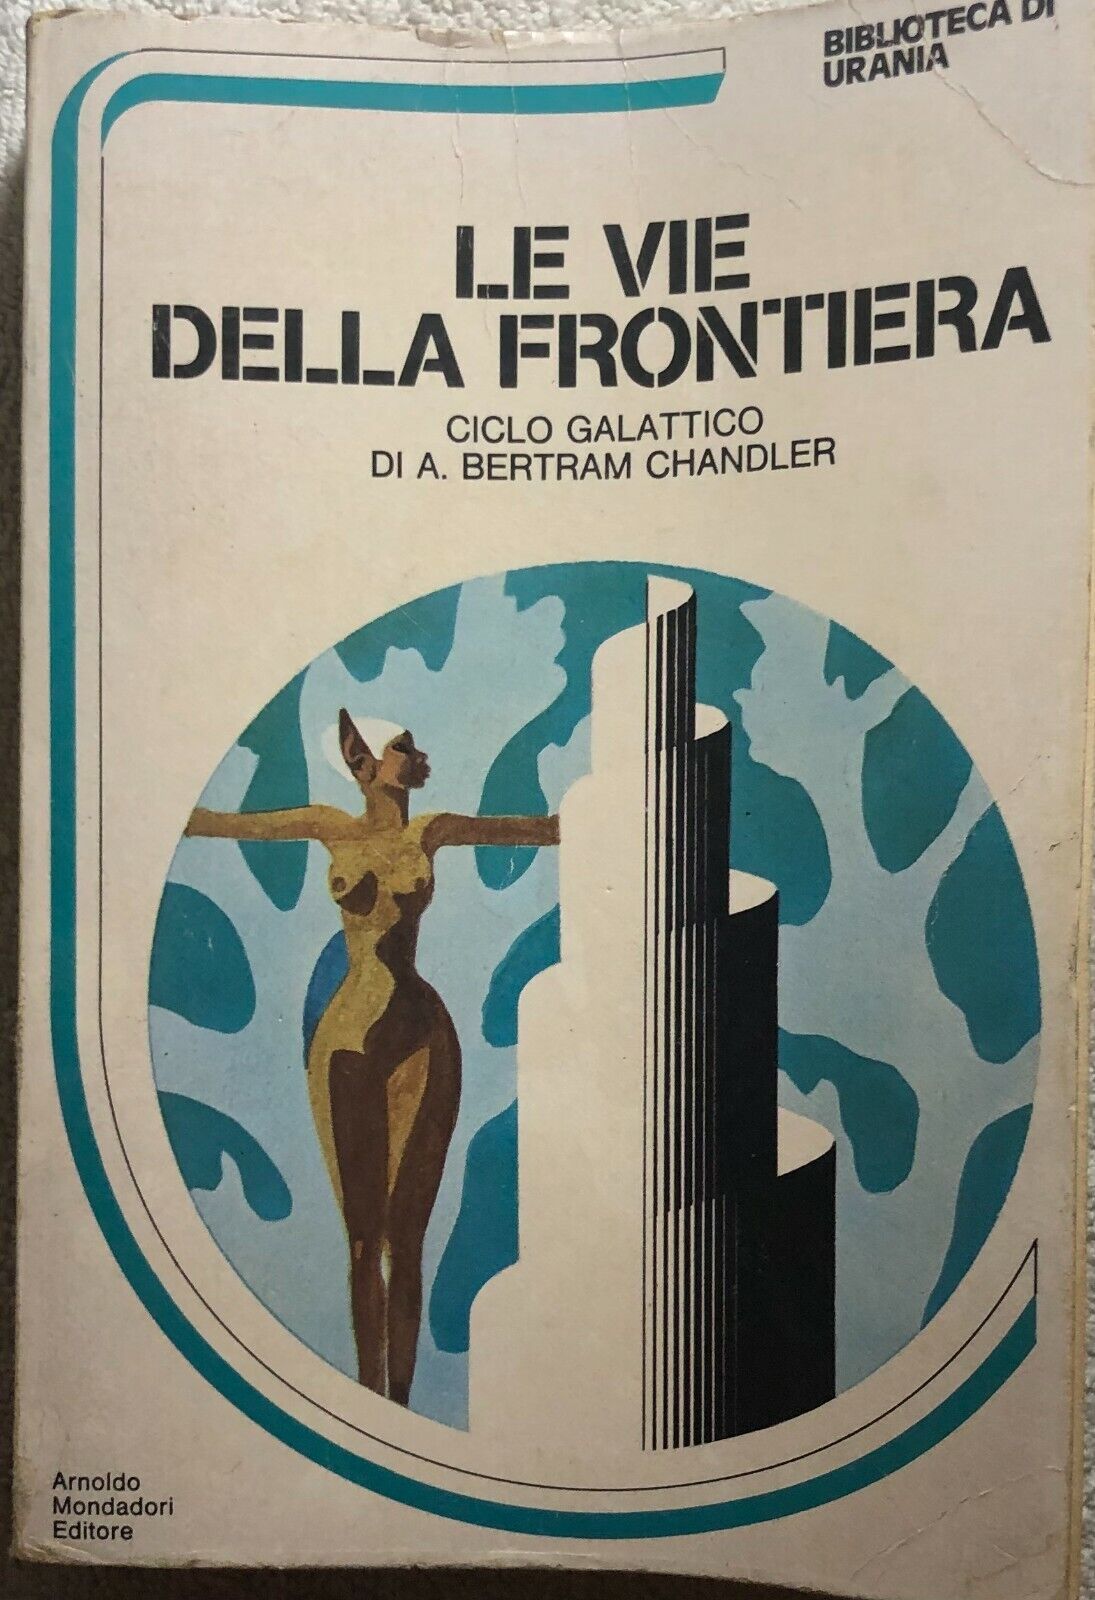 Le vie della frontiera di A. Bertram Chandler,  1974,  Arnoldo Mondadori Editore